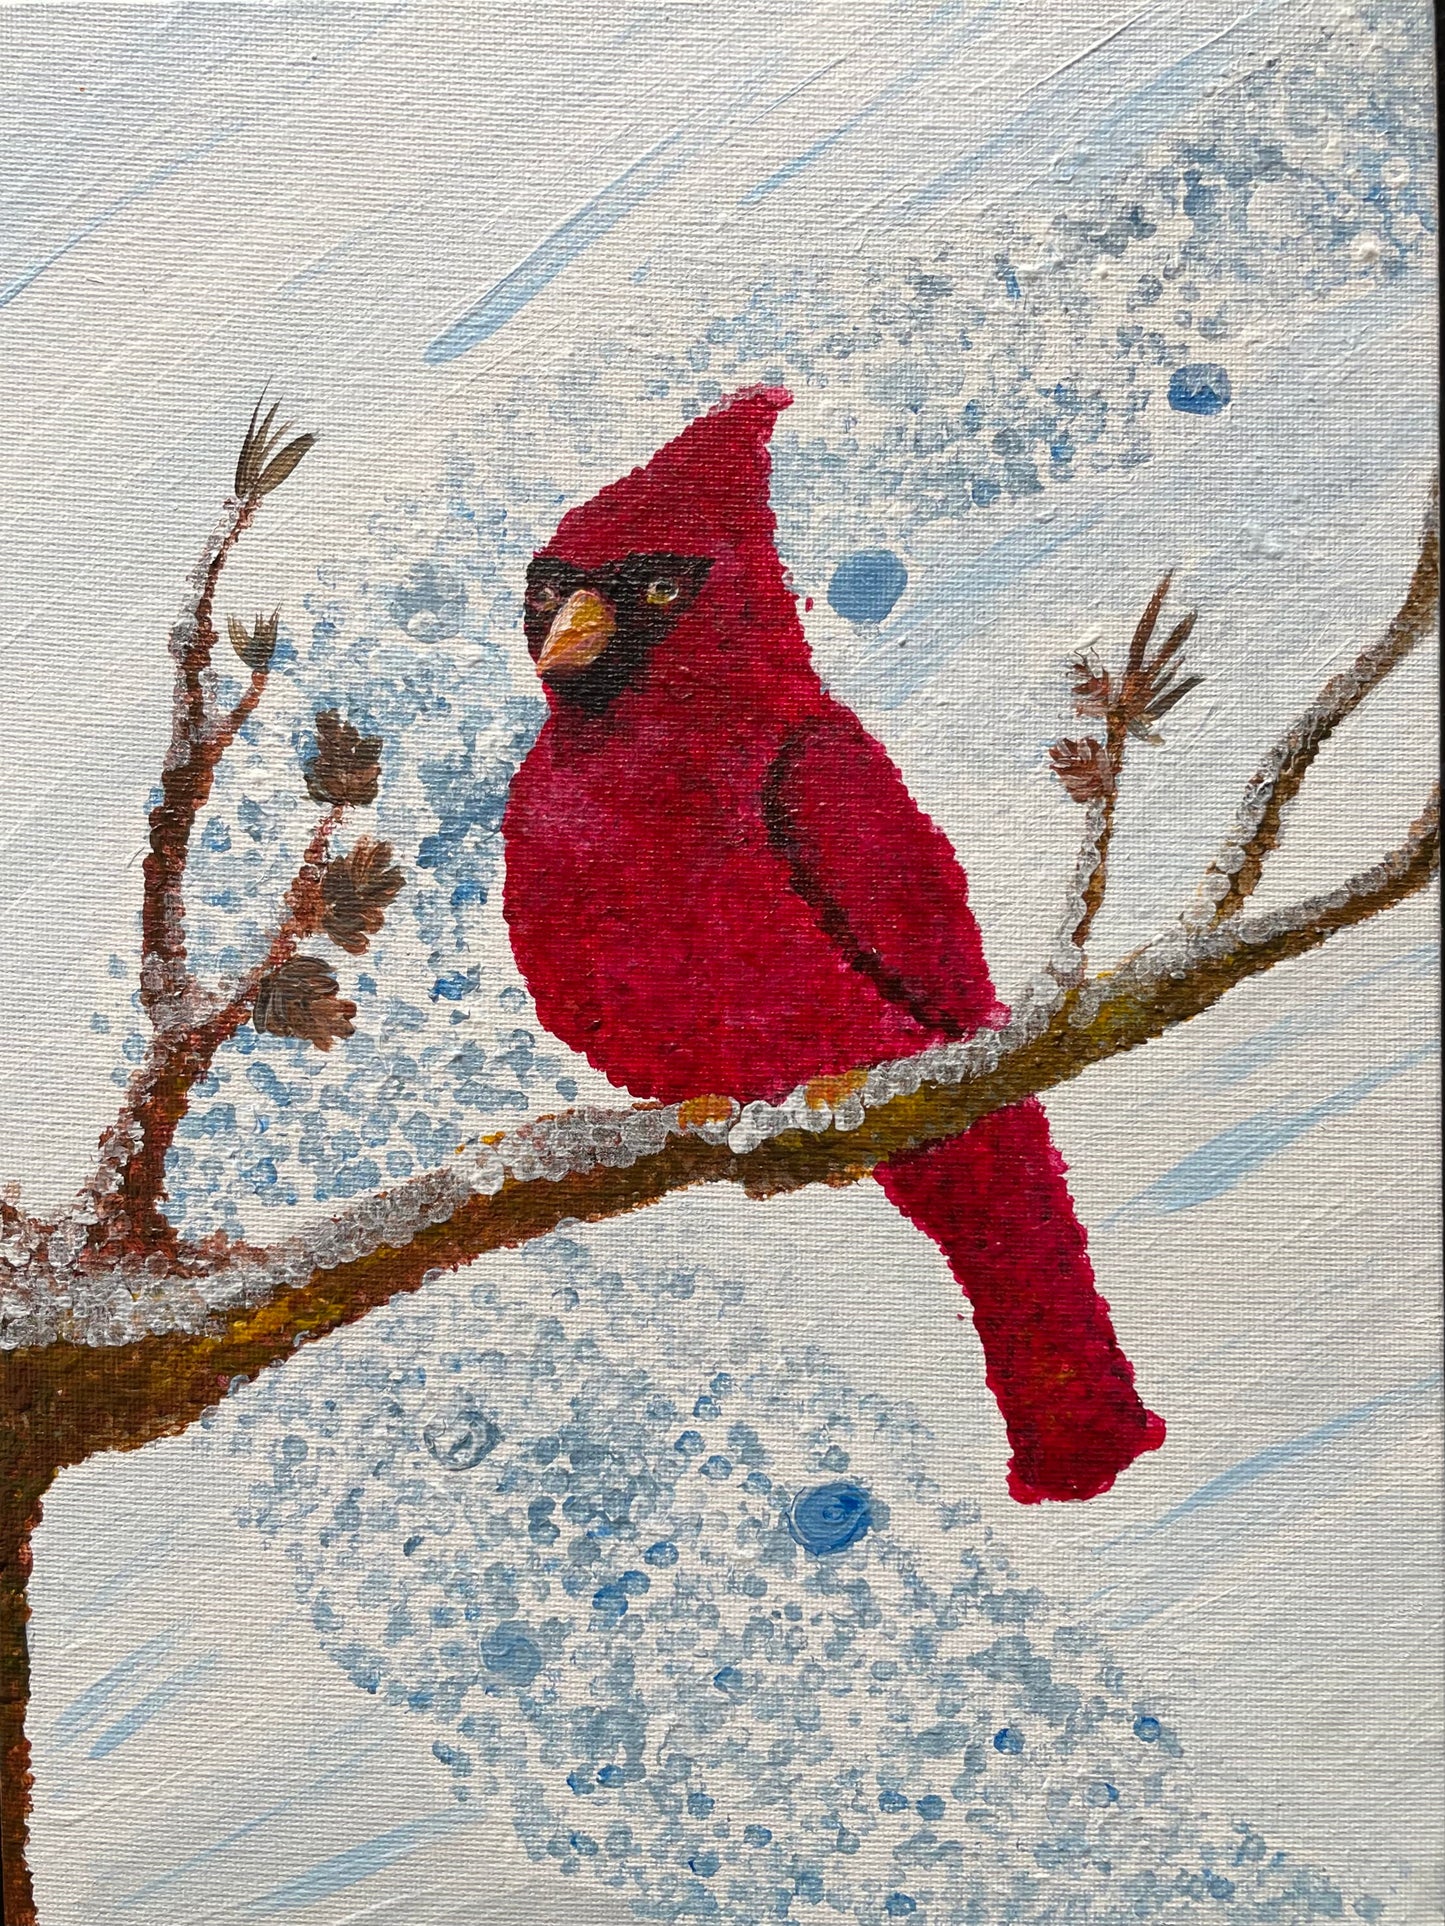 Thu, Feb 10th, 6-8P, "Cardinal Love" Private Virtual Painting Class